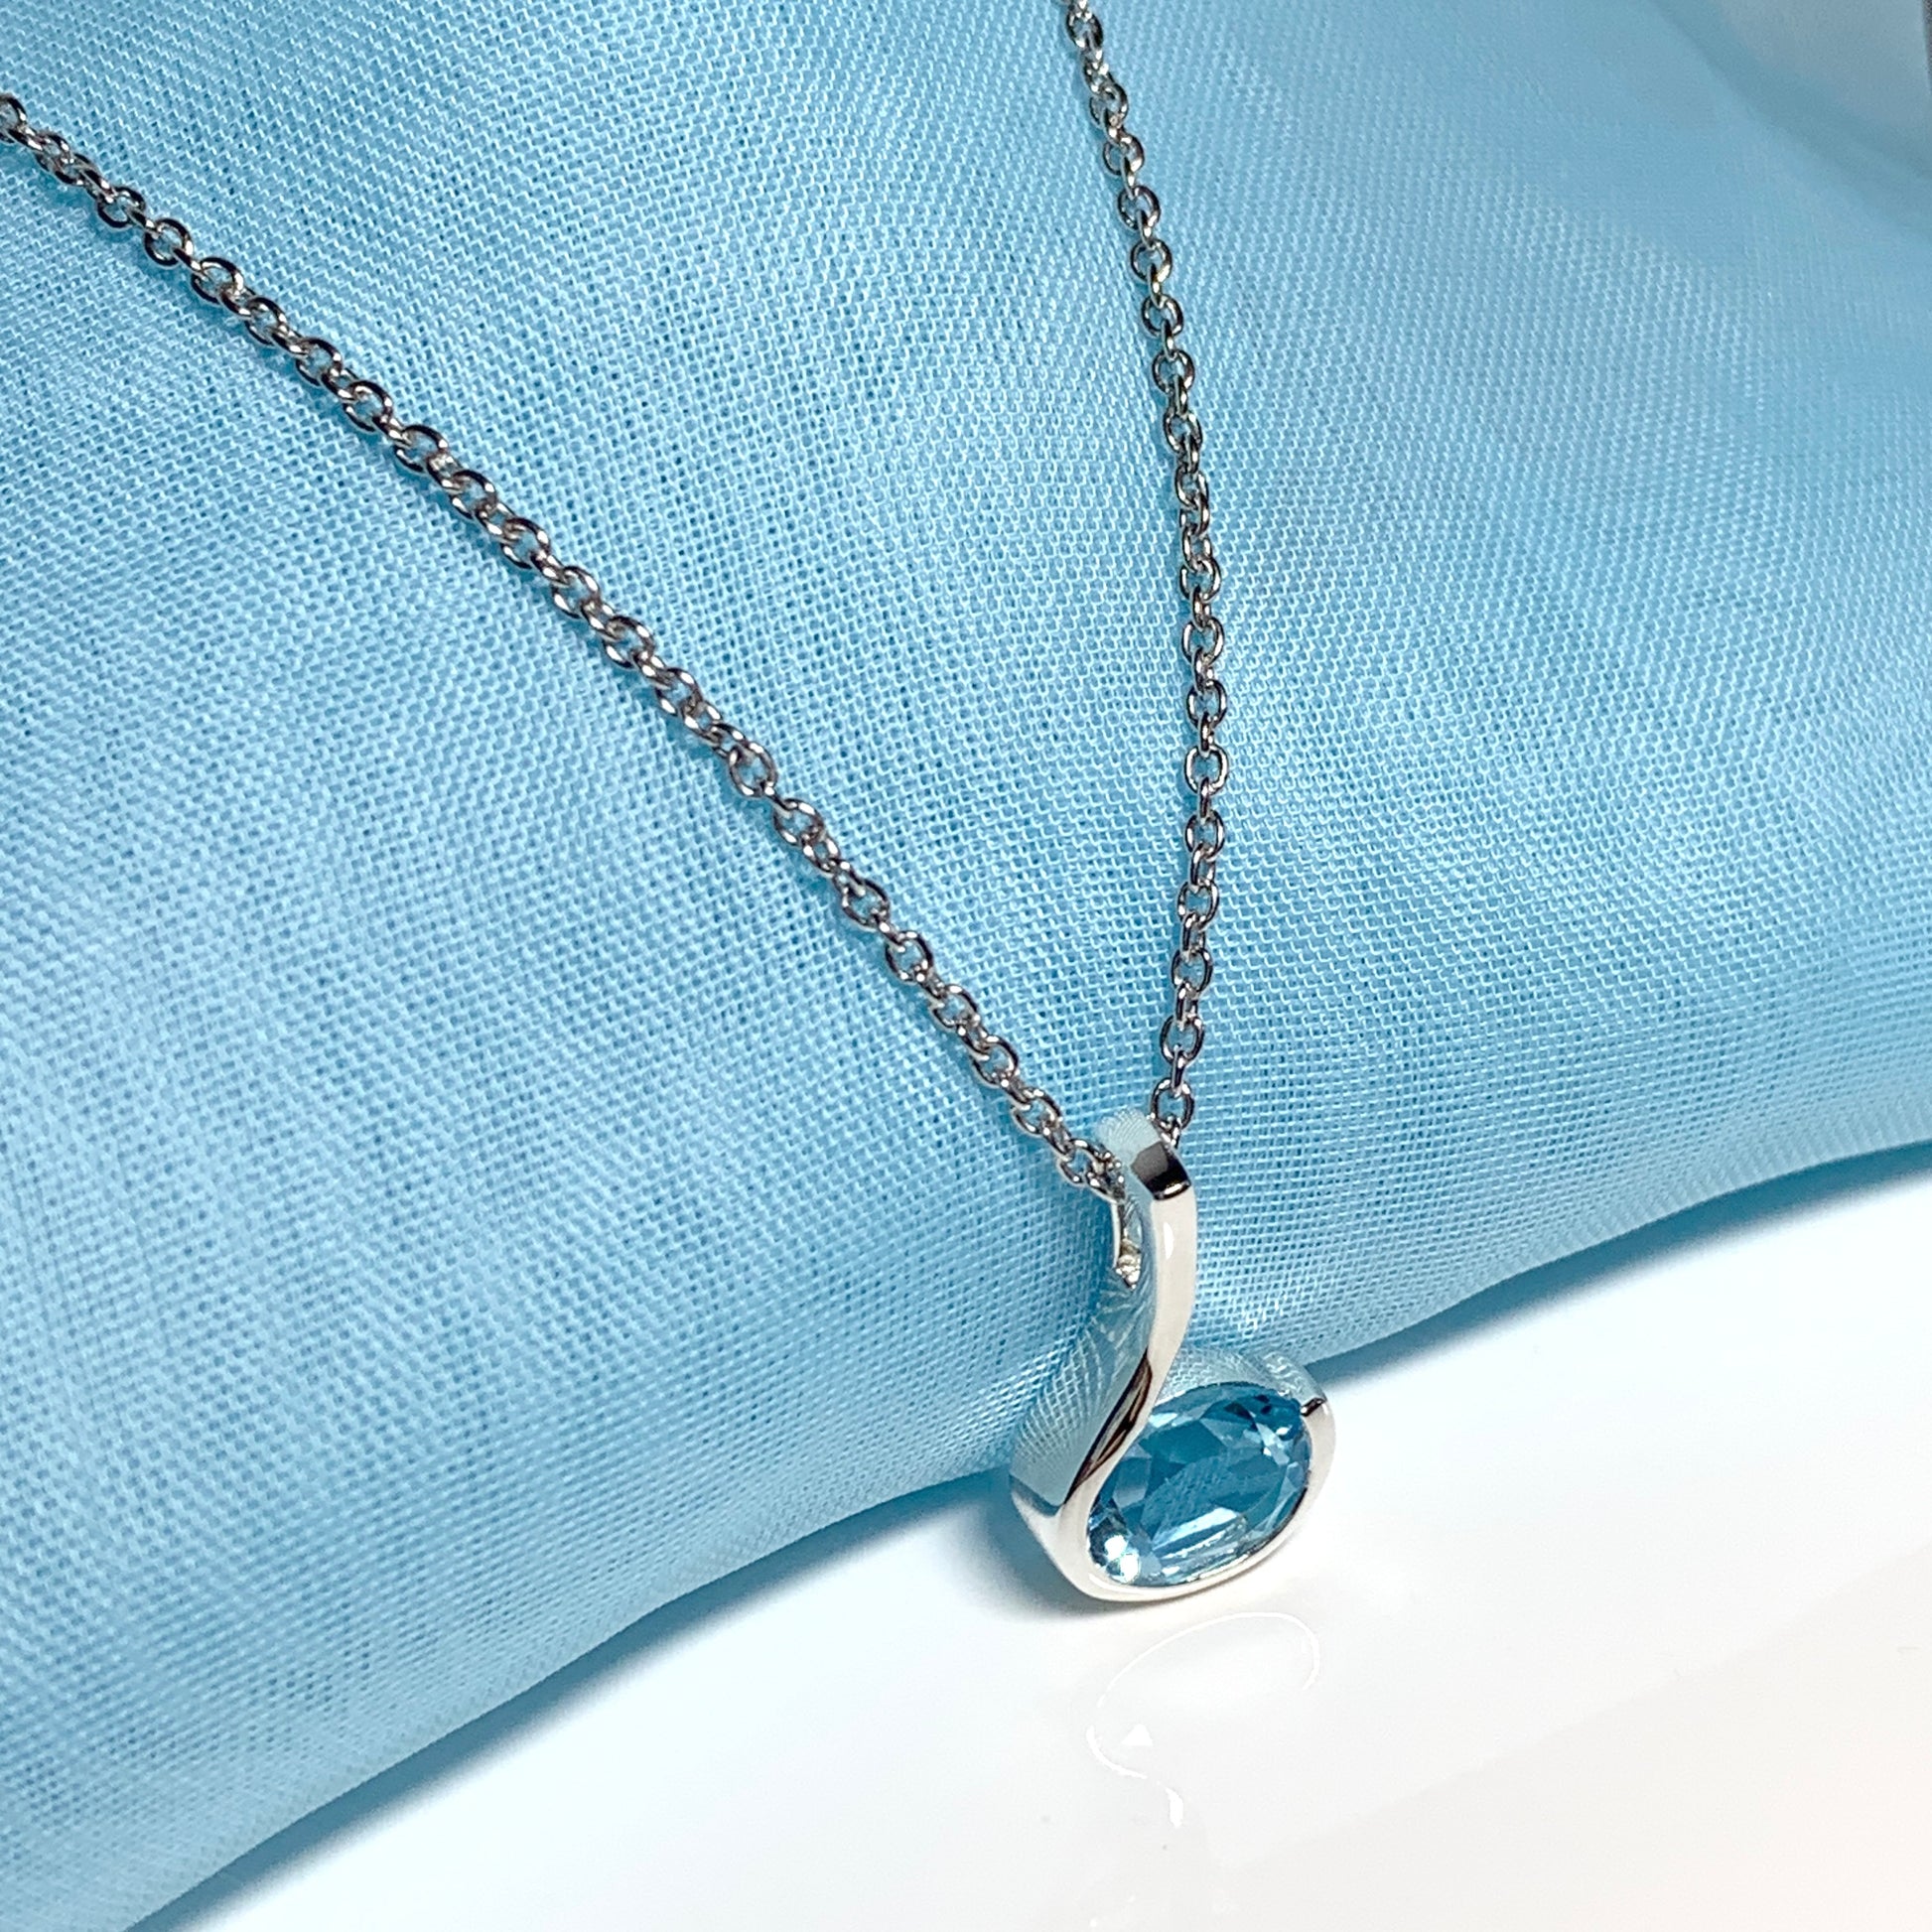 Real blue topaz necklace oval fancy swirl sterling silver